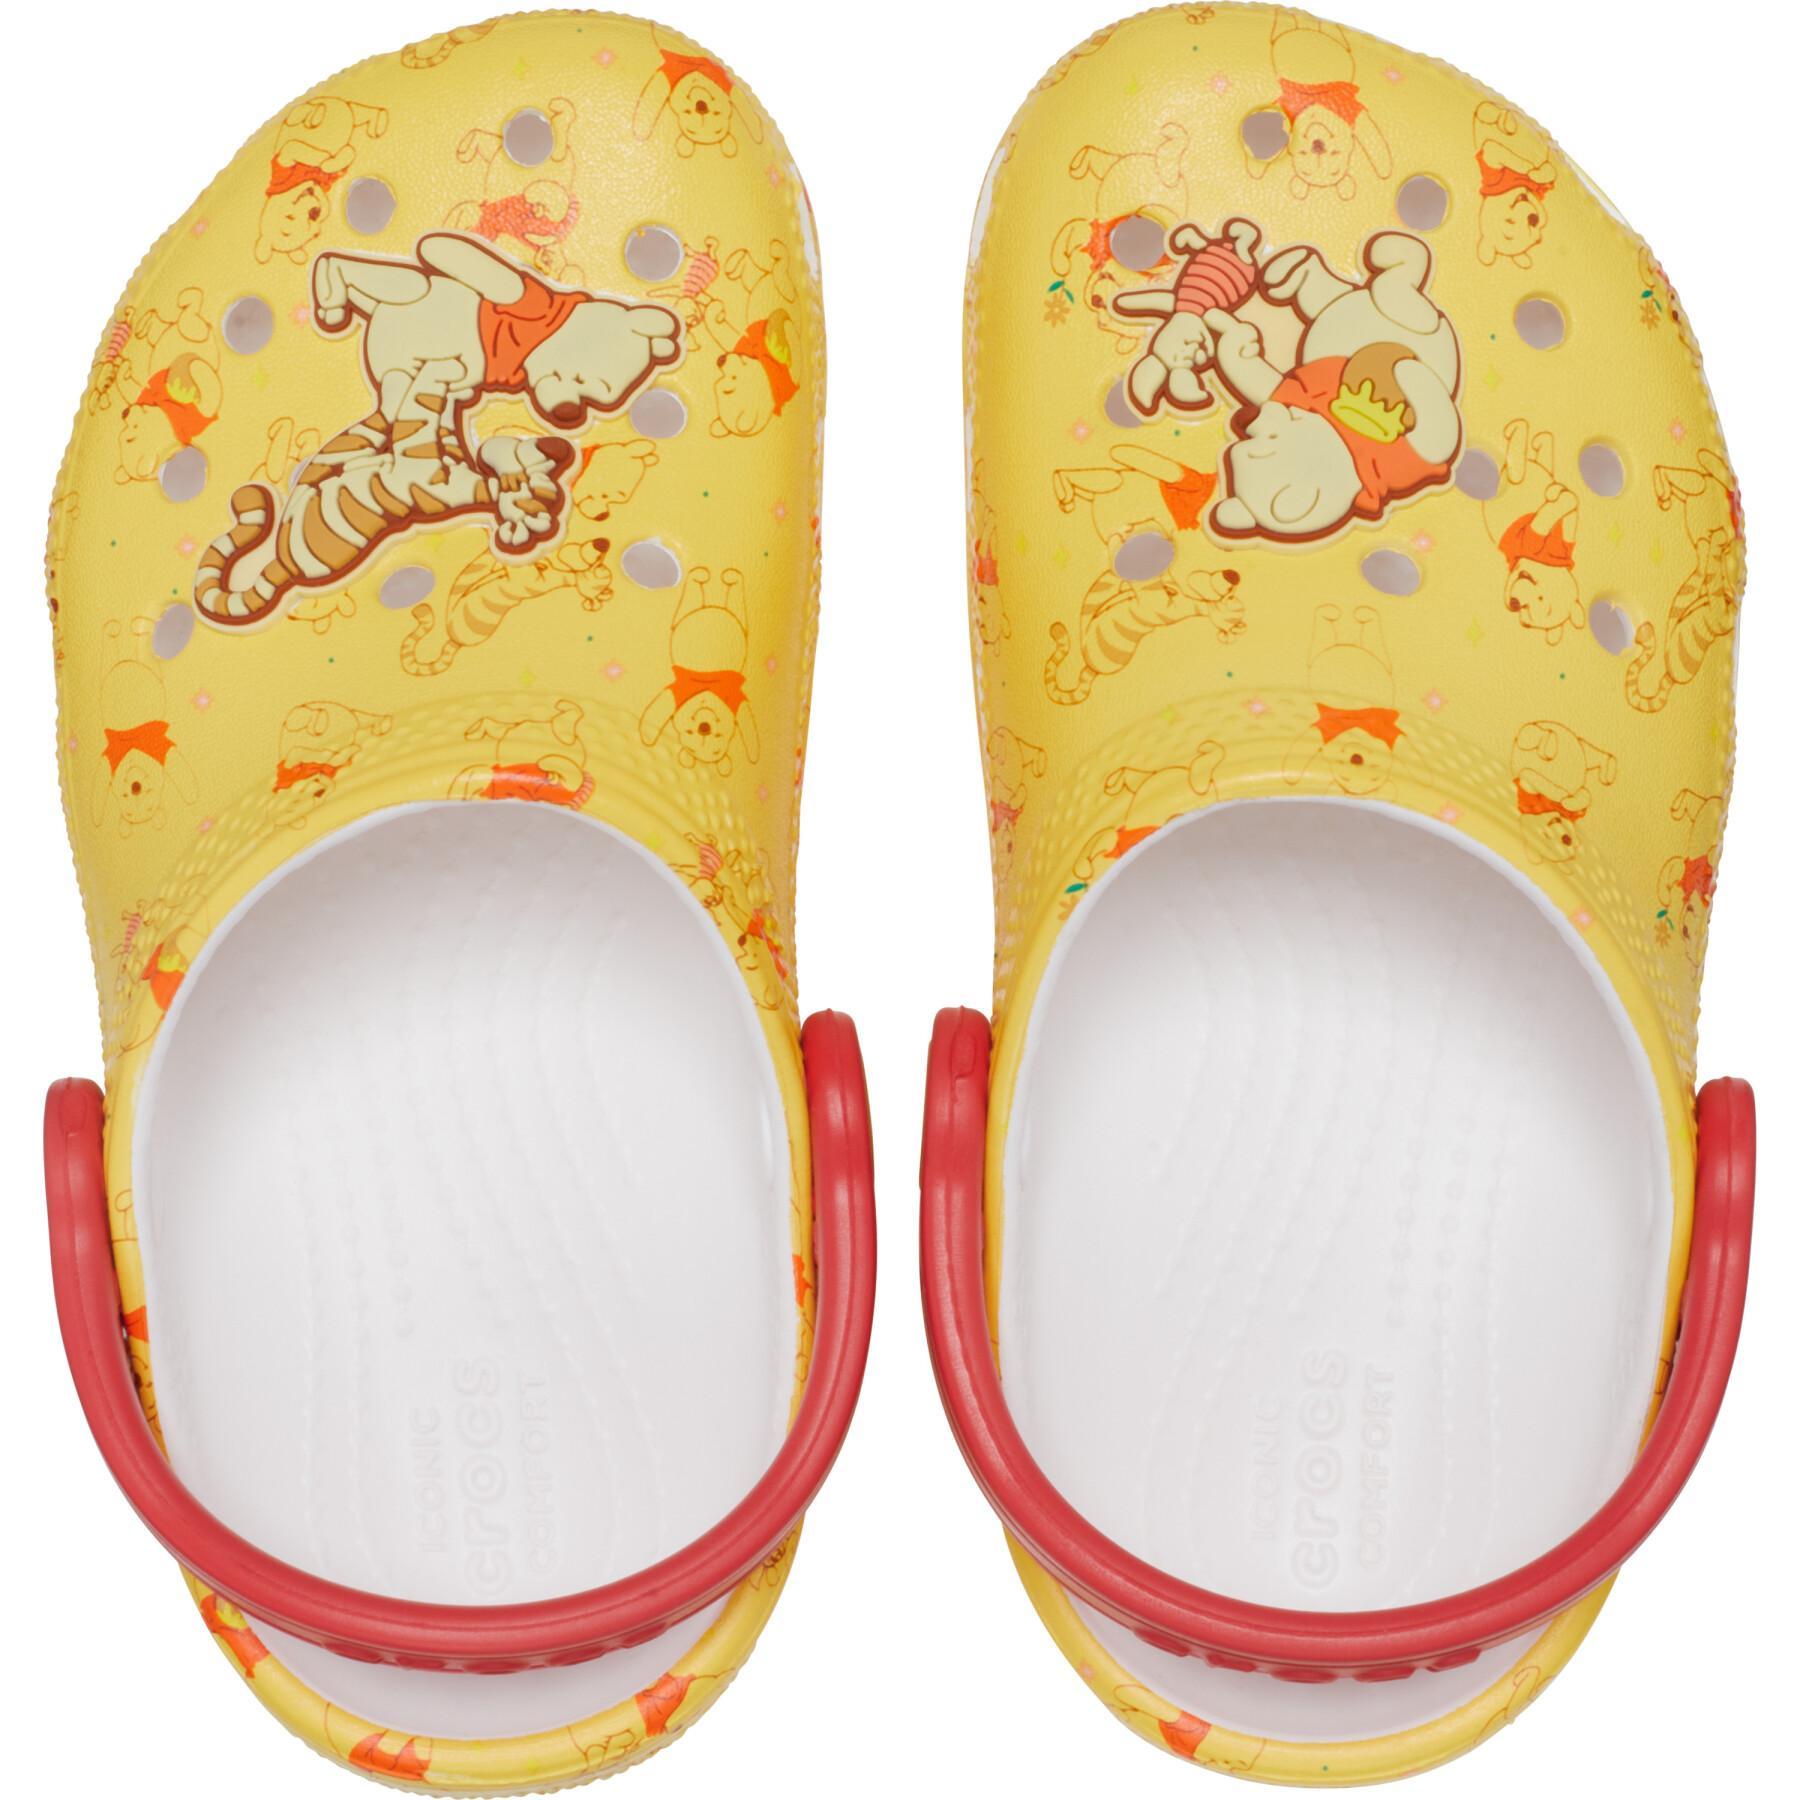 Baby clogs Crocs Classic Disney Winnie the Pooh